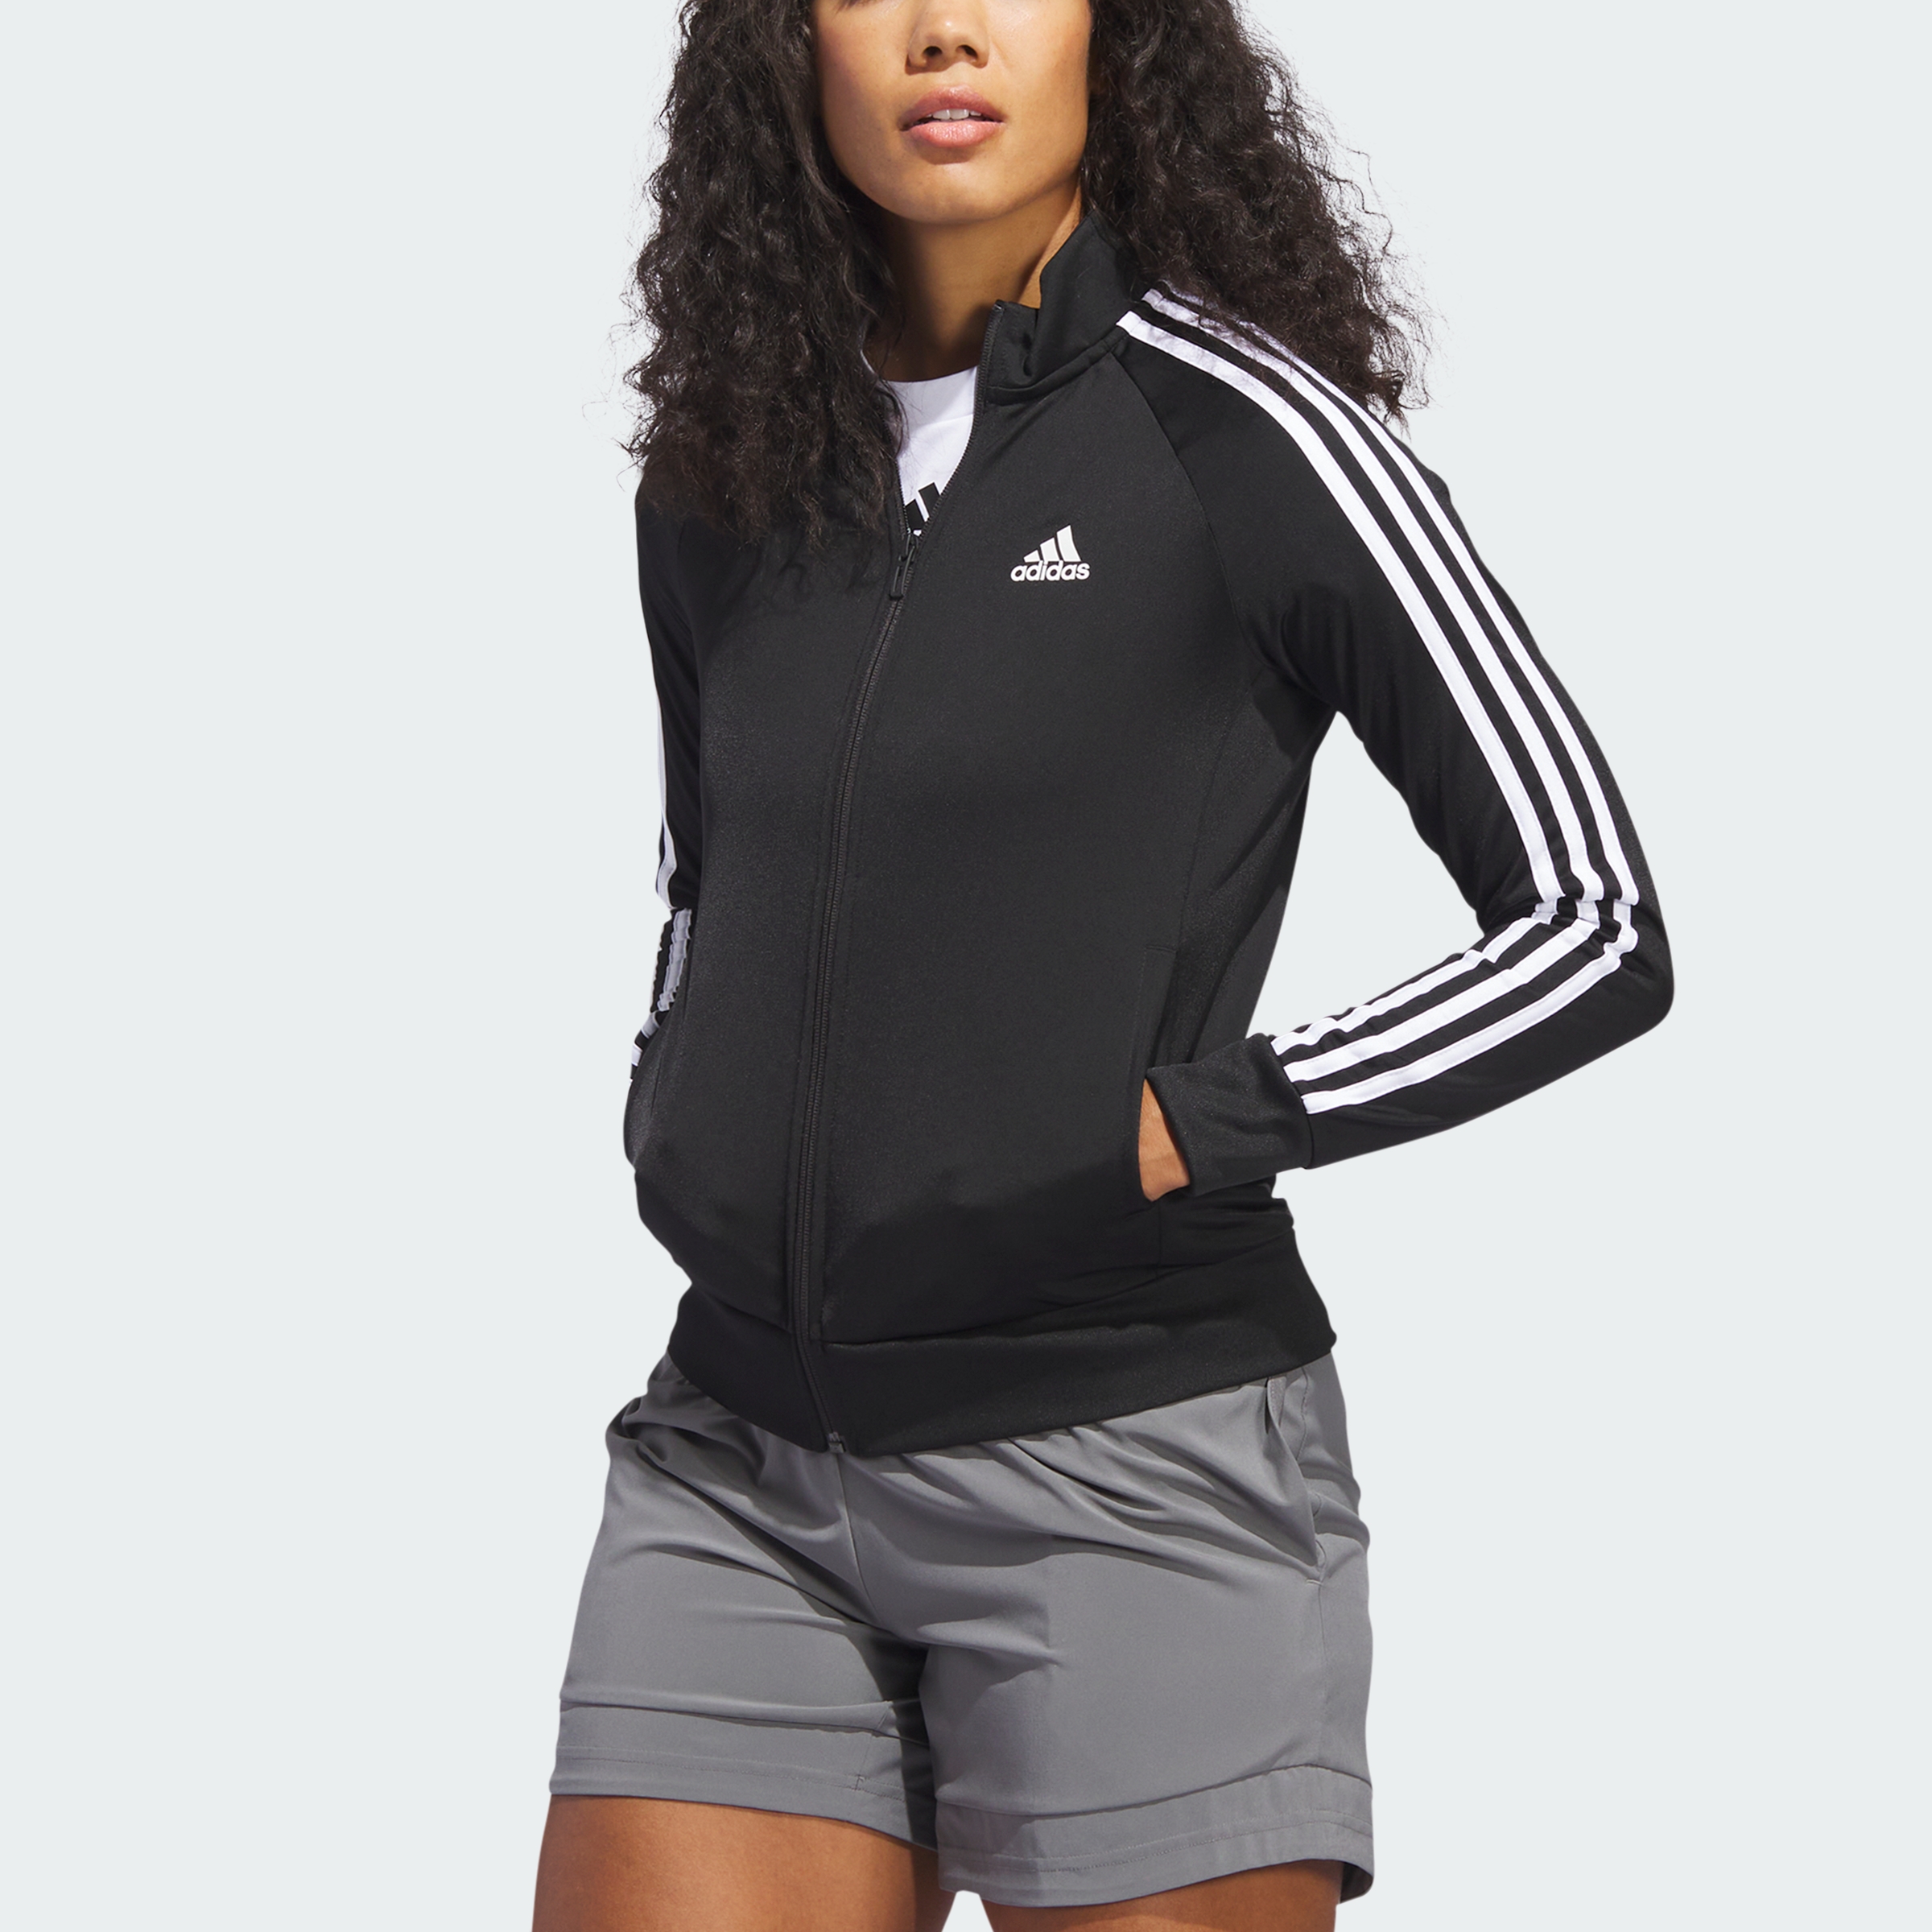 Adidas Originals Europa Track Jacket Women's BK5936 Black 3 Stripes TT Zip  Rare | eBay